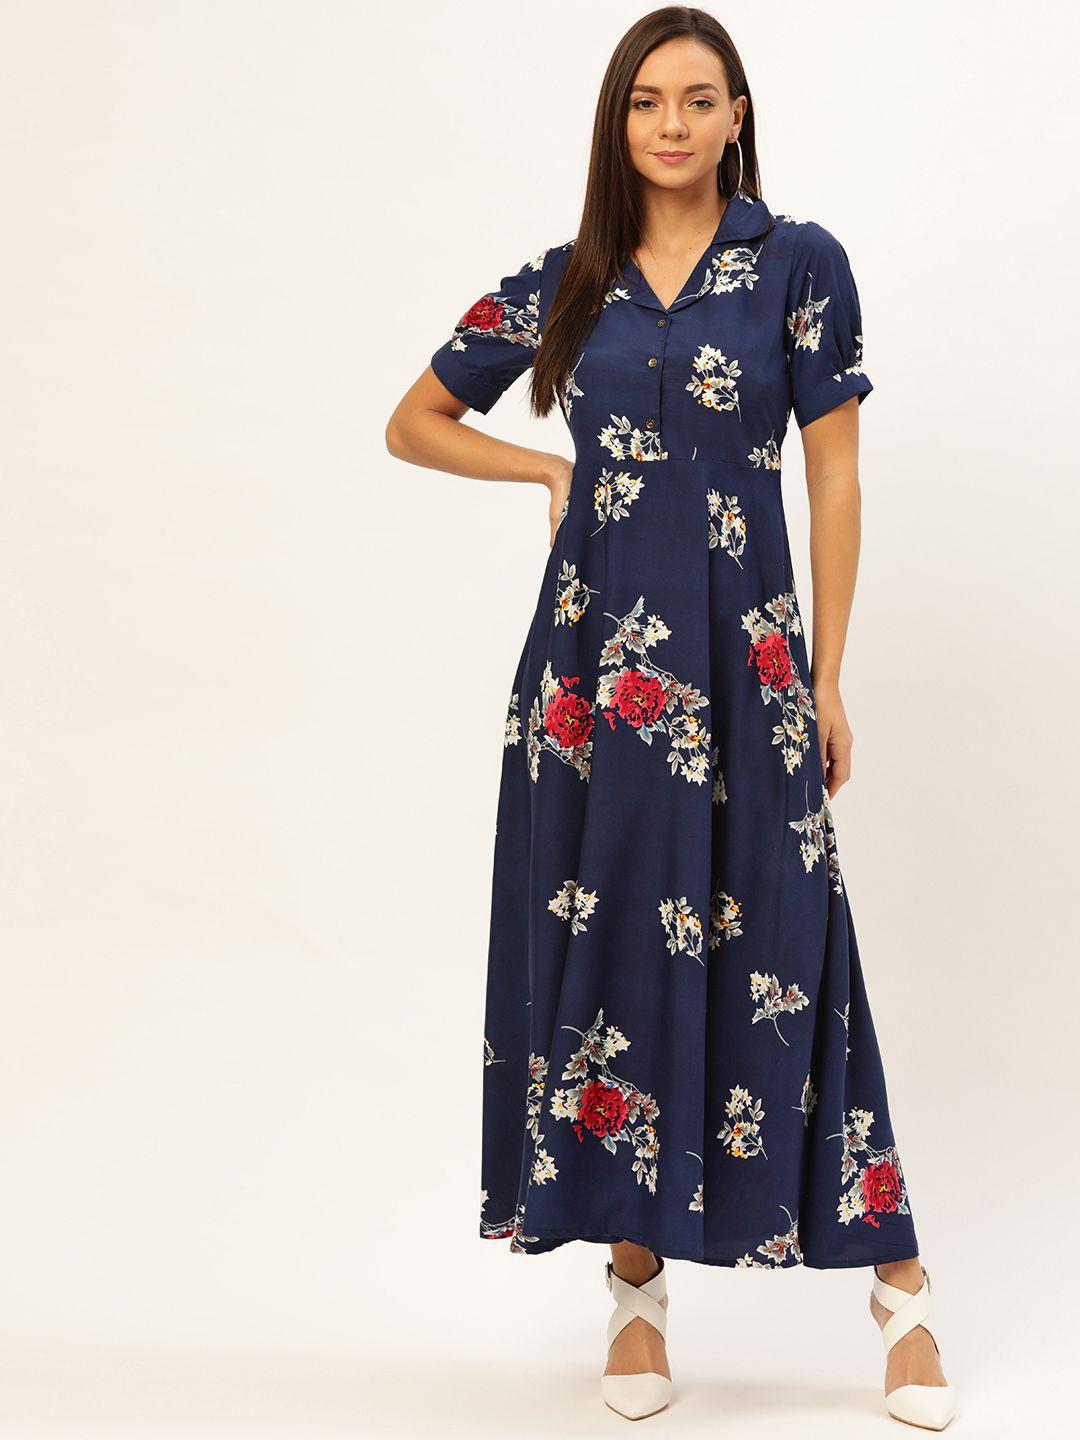 u&f navy blue & white floral printed maxi dress